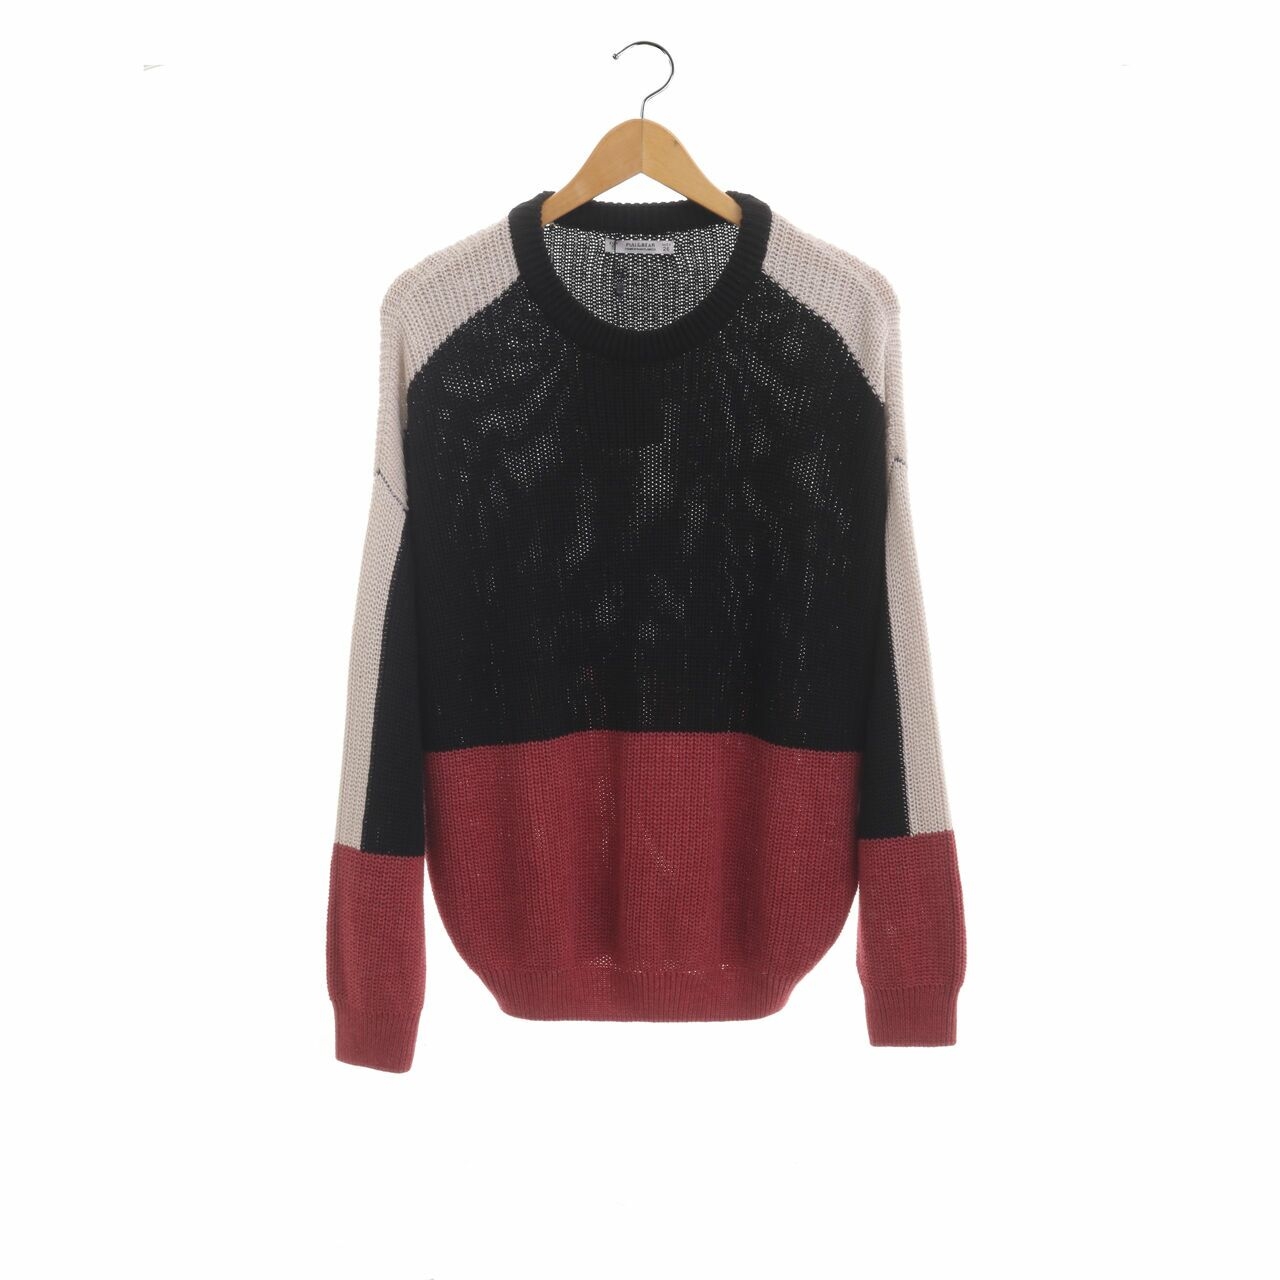 Pull & Bear Black & Red Sweater